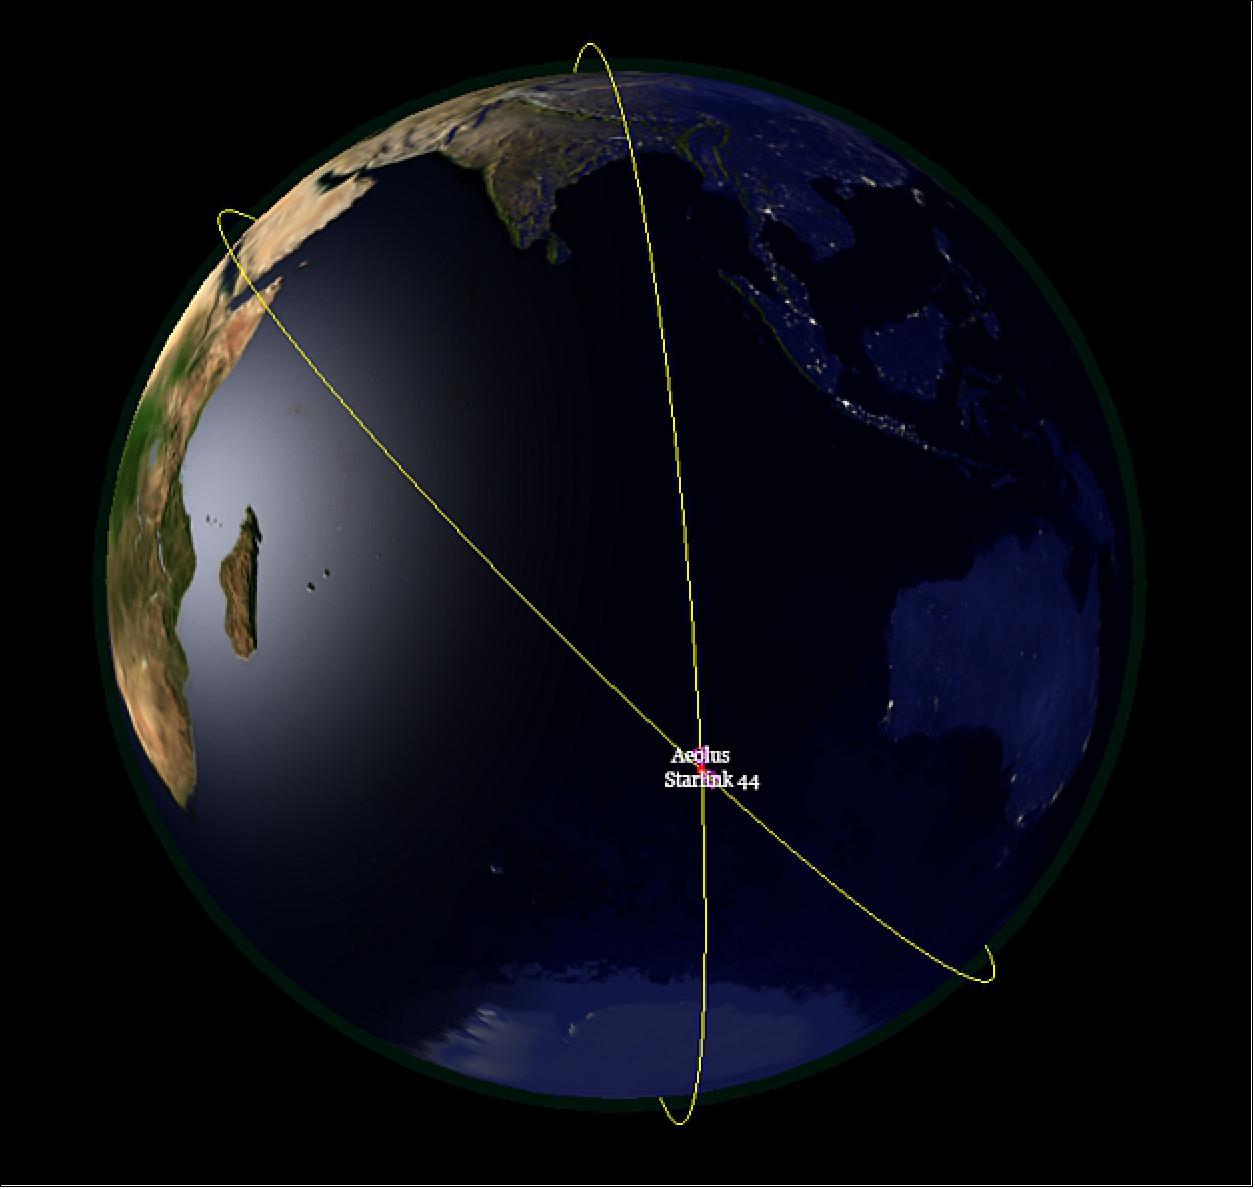 Figure 33: Predicted conjunction between Aeolus and Starlink 44 (image credit: ESA)